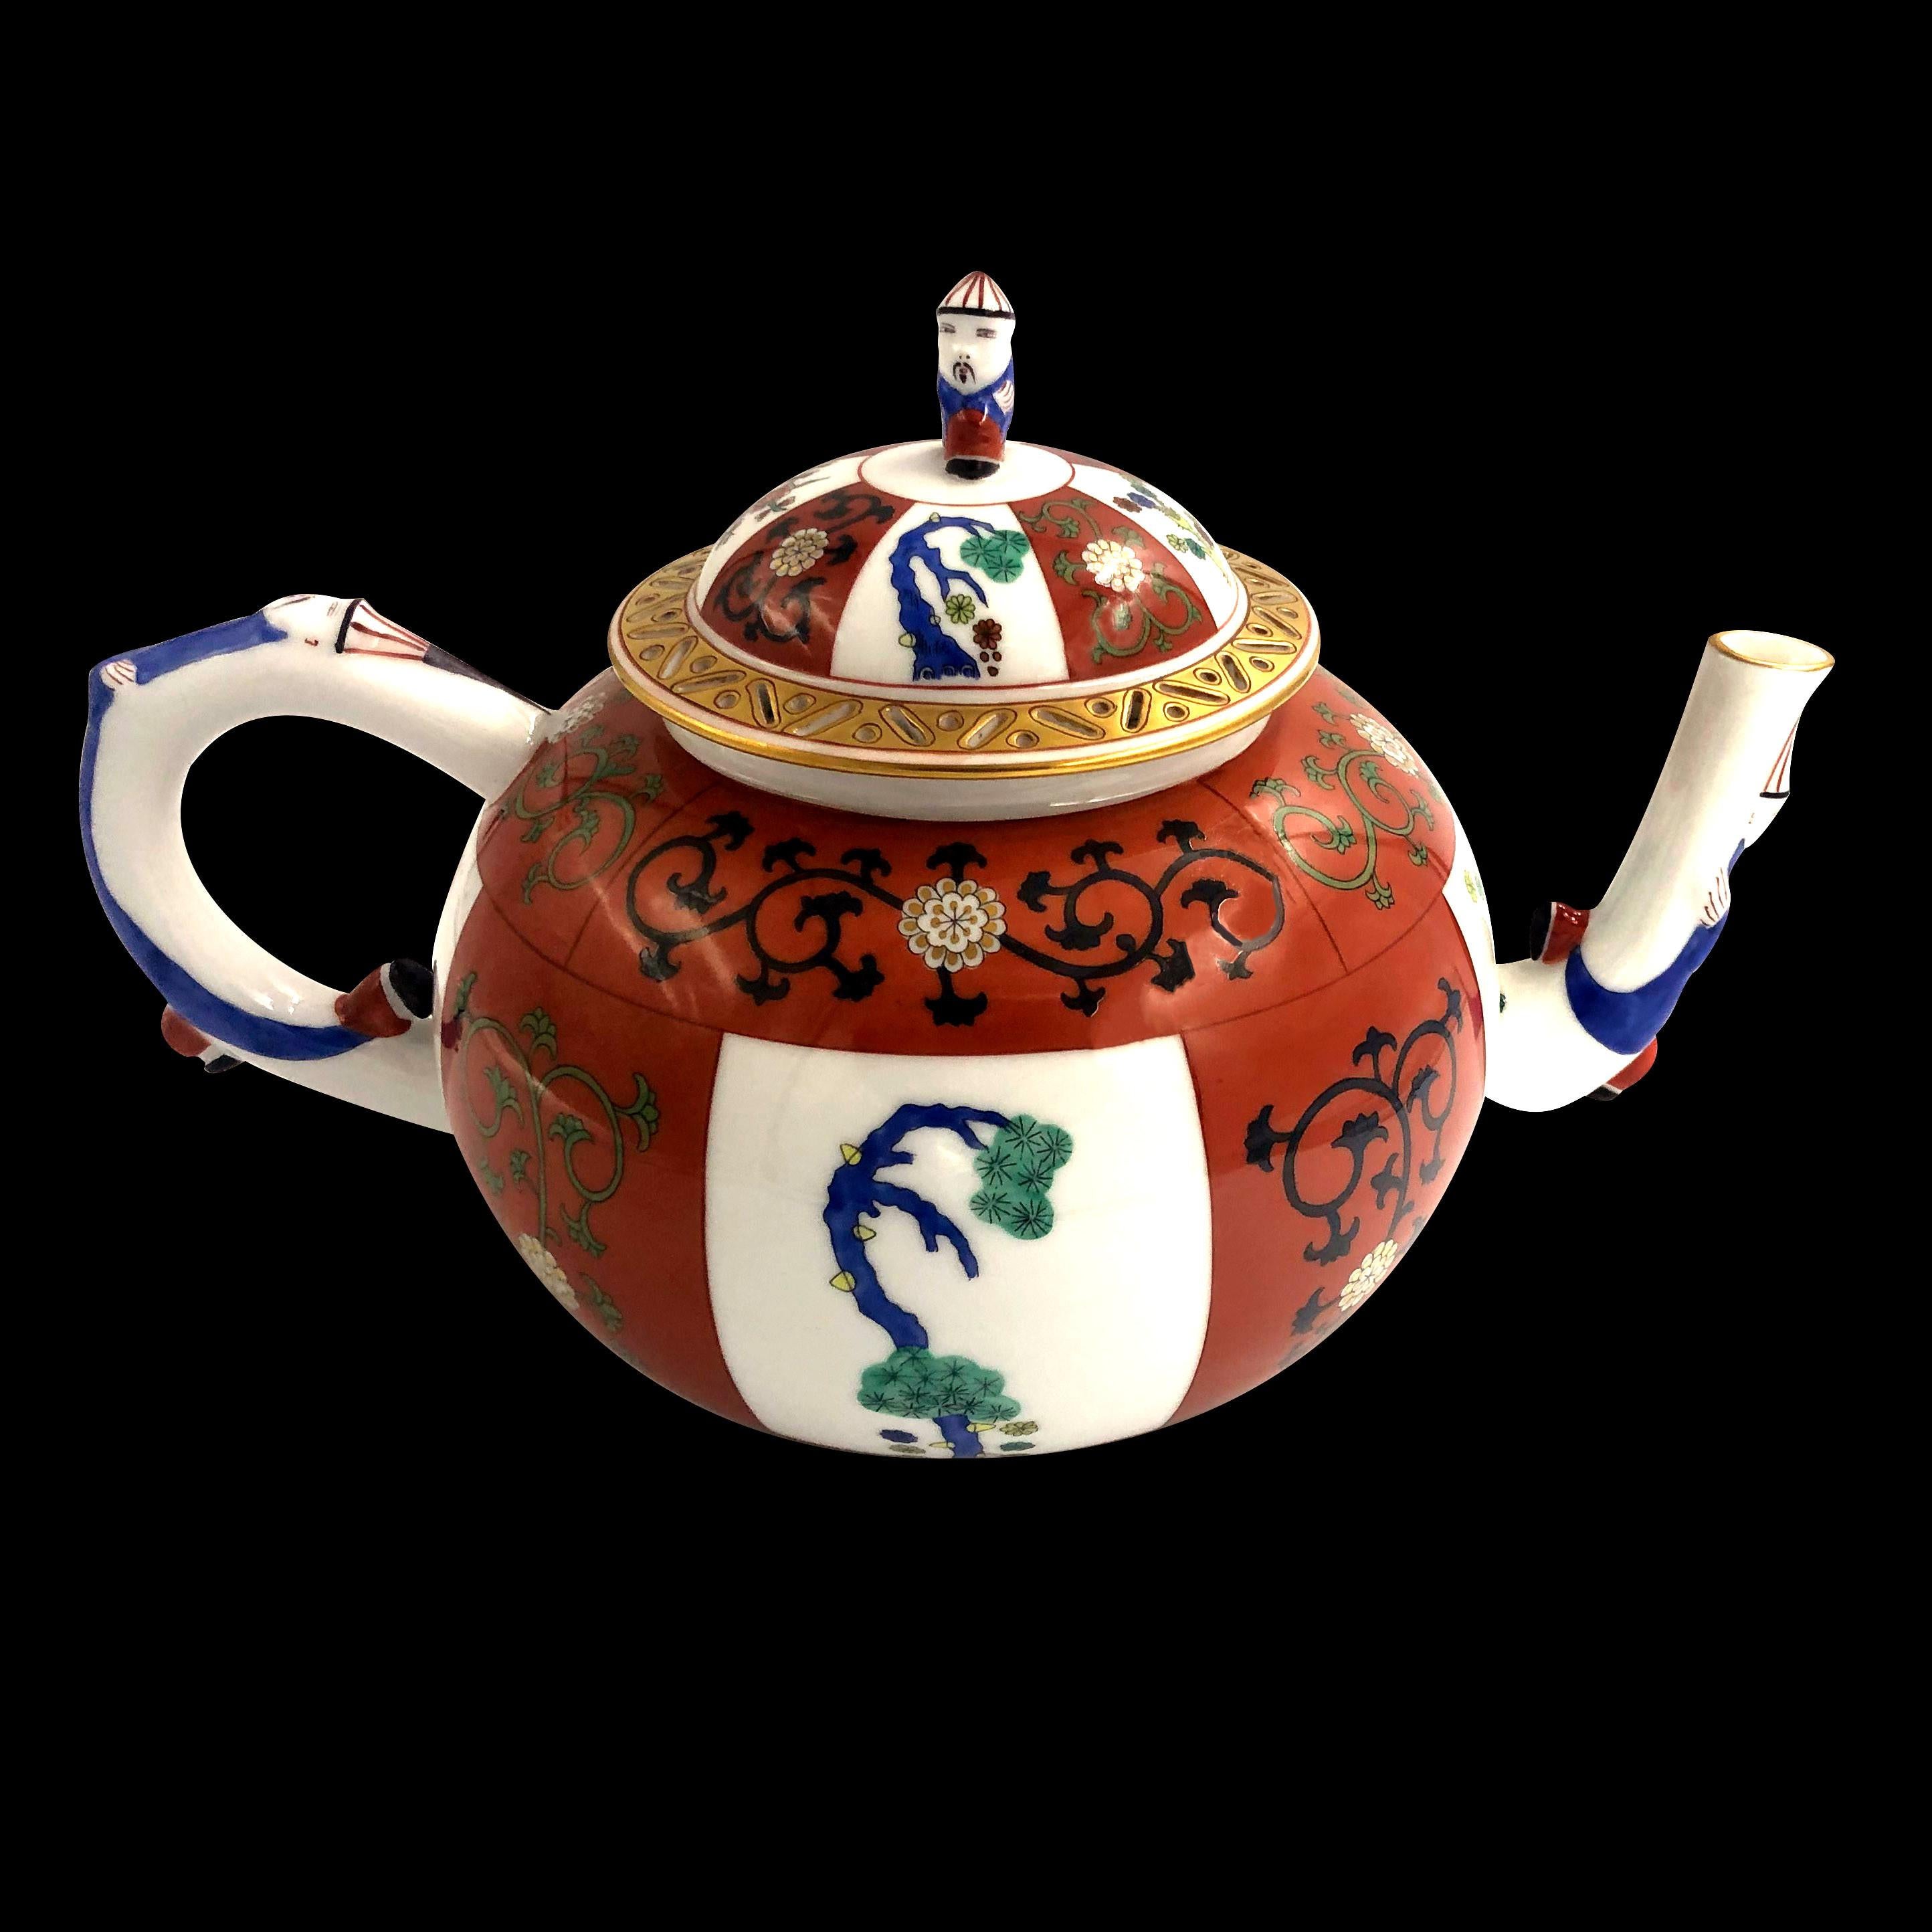 Godollo Tea Set in Herend Porcelain for Famous Queen Elizabeth 2